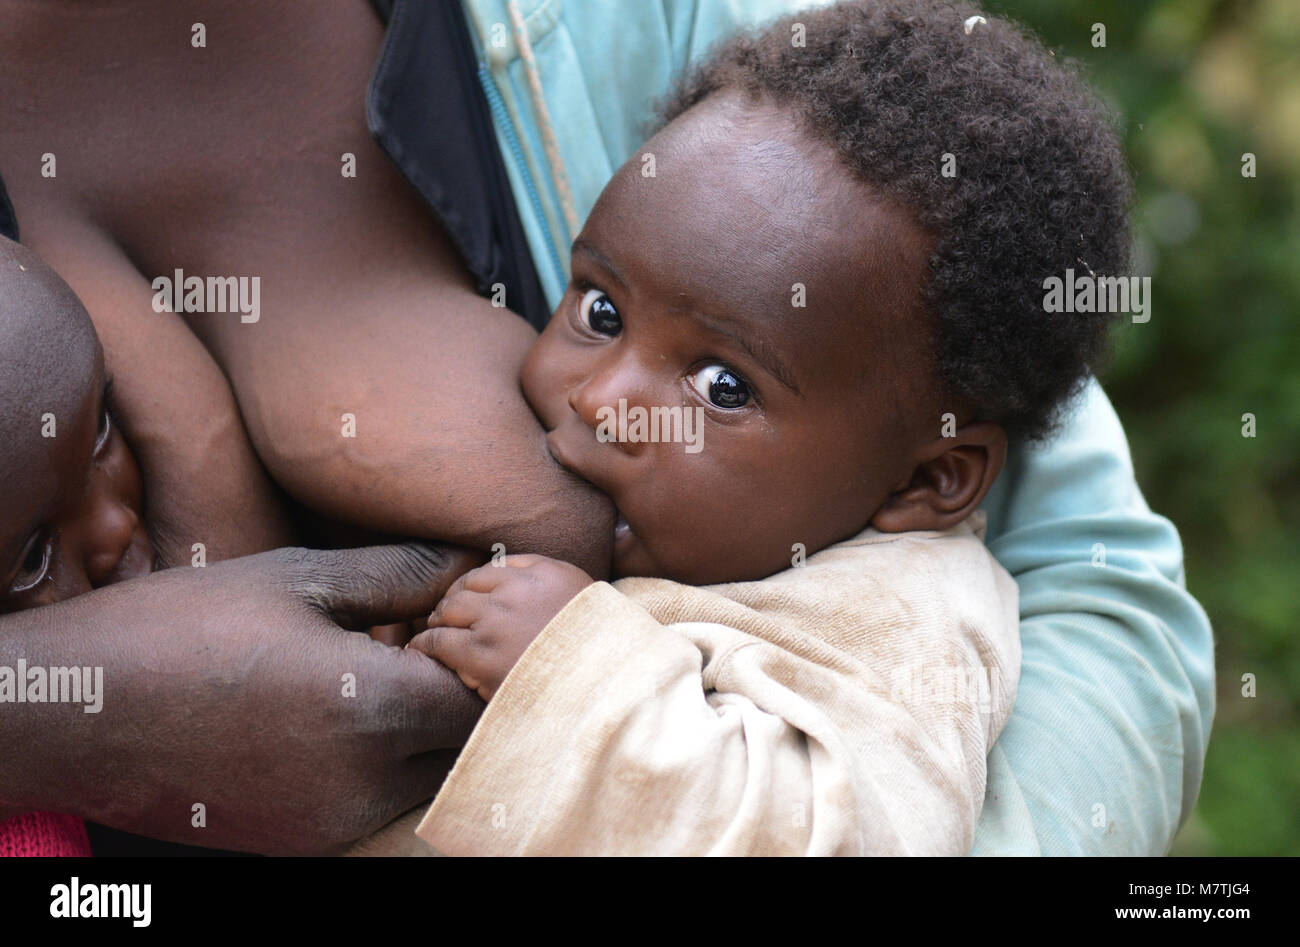 https://c8.alamy.com/comp/M7TJG4/a-congolese-woman-breastfeeding-her-twins-M7TJG4.jpg